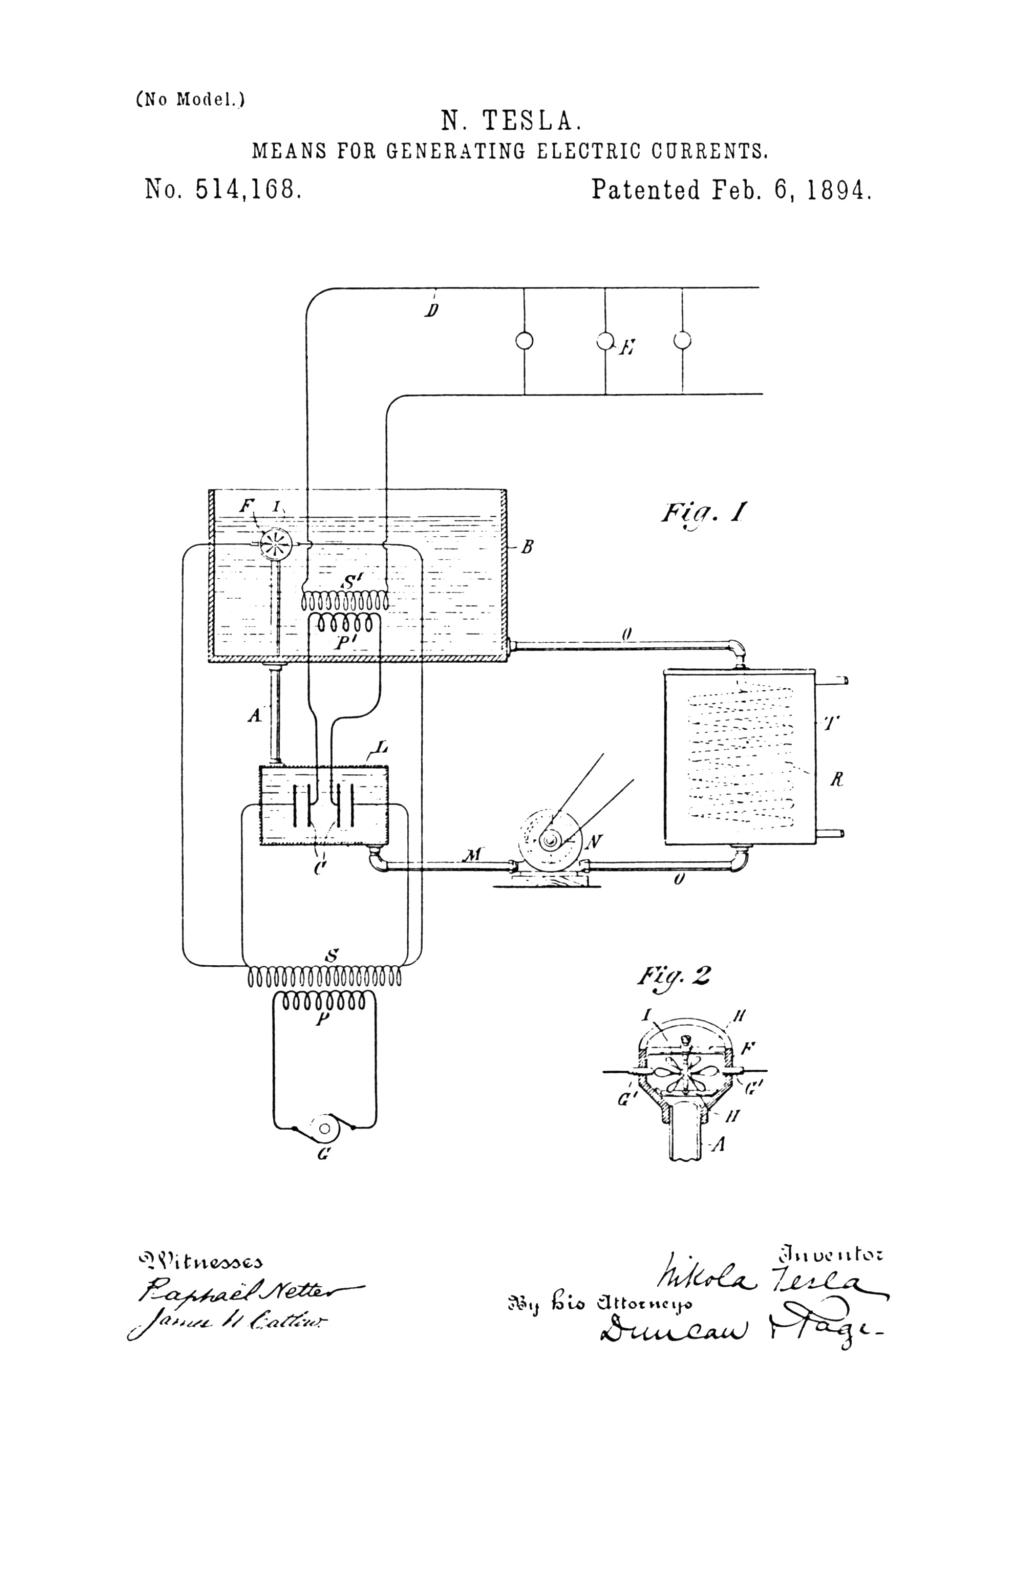 Nikola Tesla U.S. Patent 514,168 - Means for Generating Electric Currents - Image 1